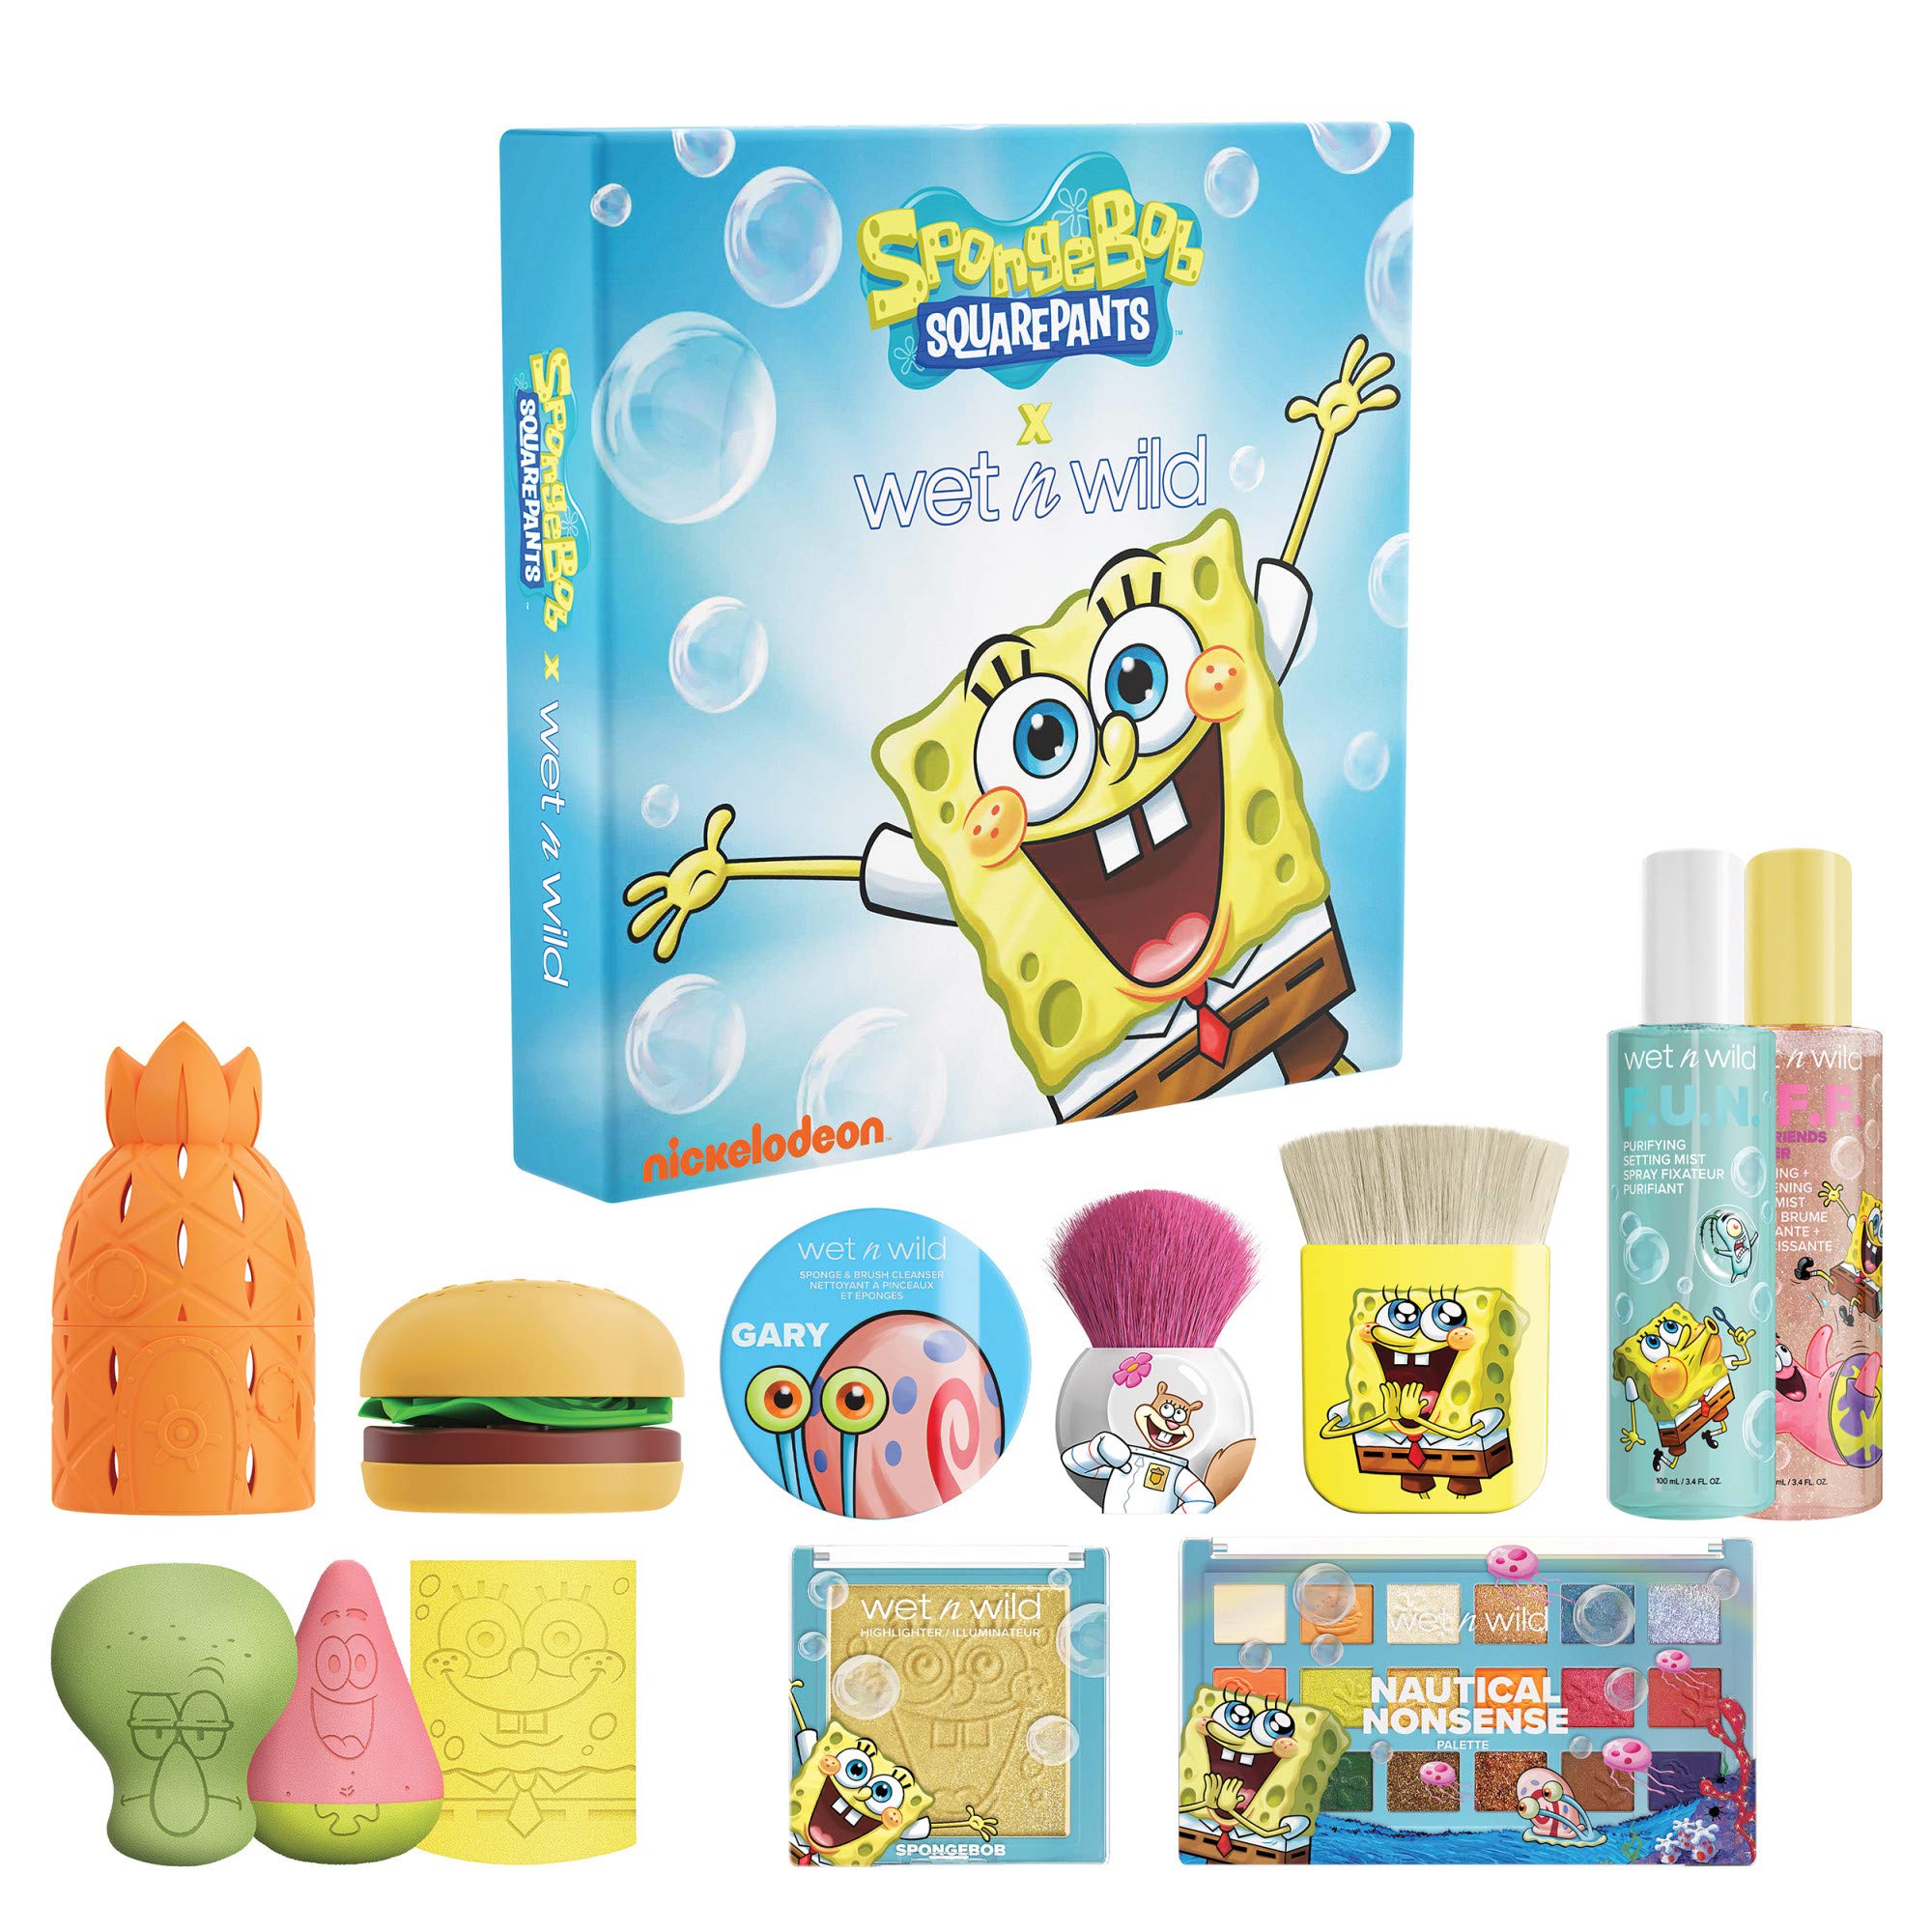 Wet n Wild Spongebob Squarepants Makeup Collection (Brushes, Sponges, Eyeshadow Palette, Primer Spray) $35.20 + Free Shipping